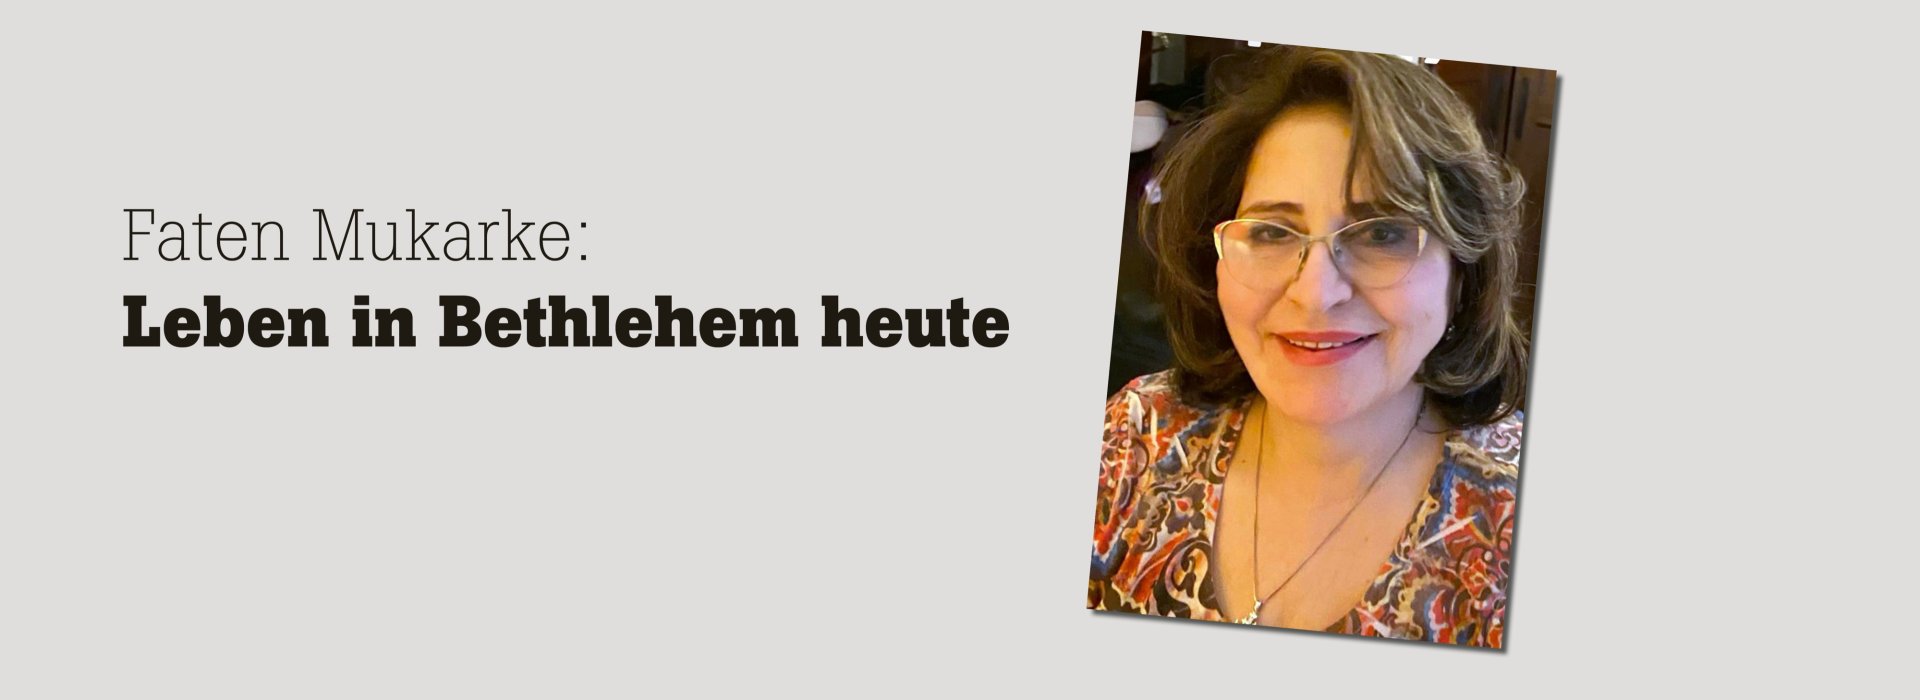 Faten Mukarke: Leben in Bethlehem heute